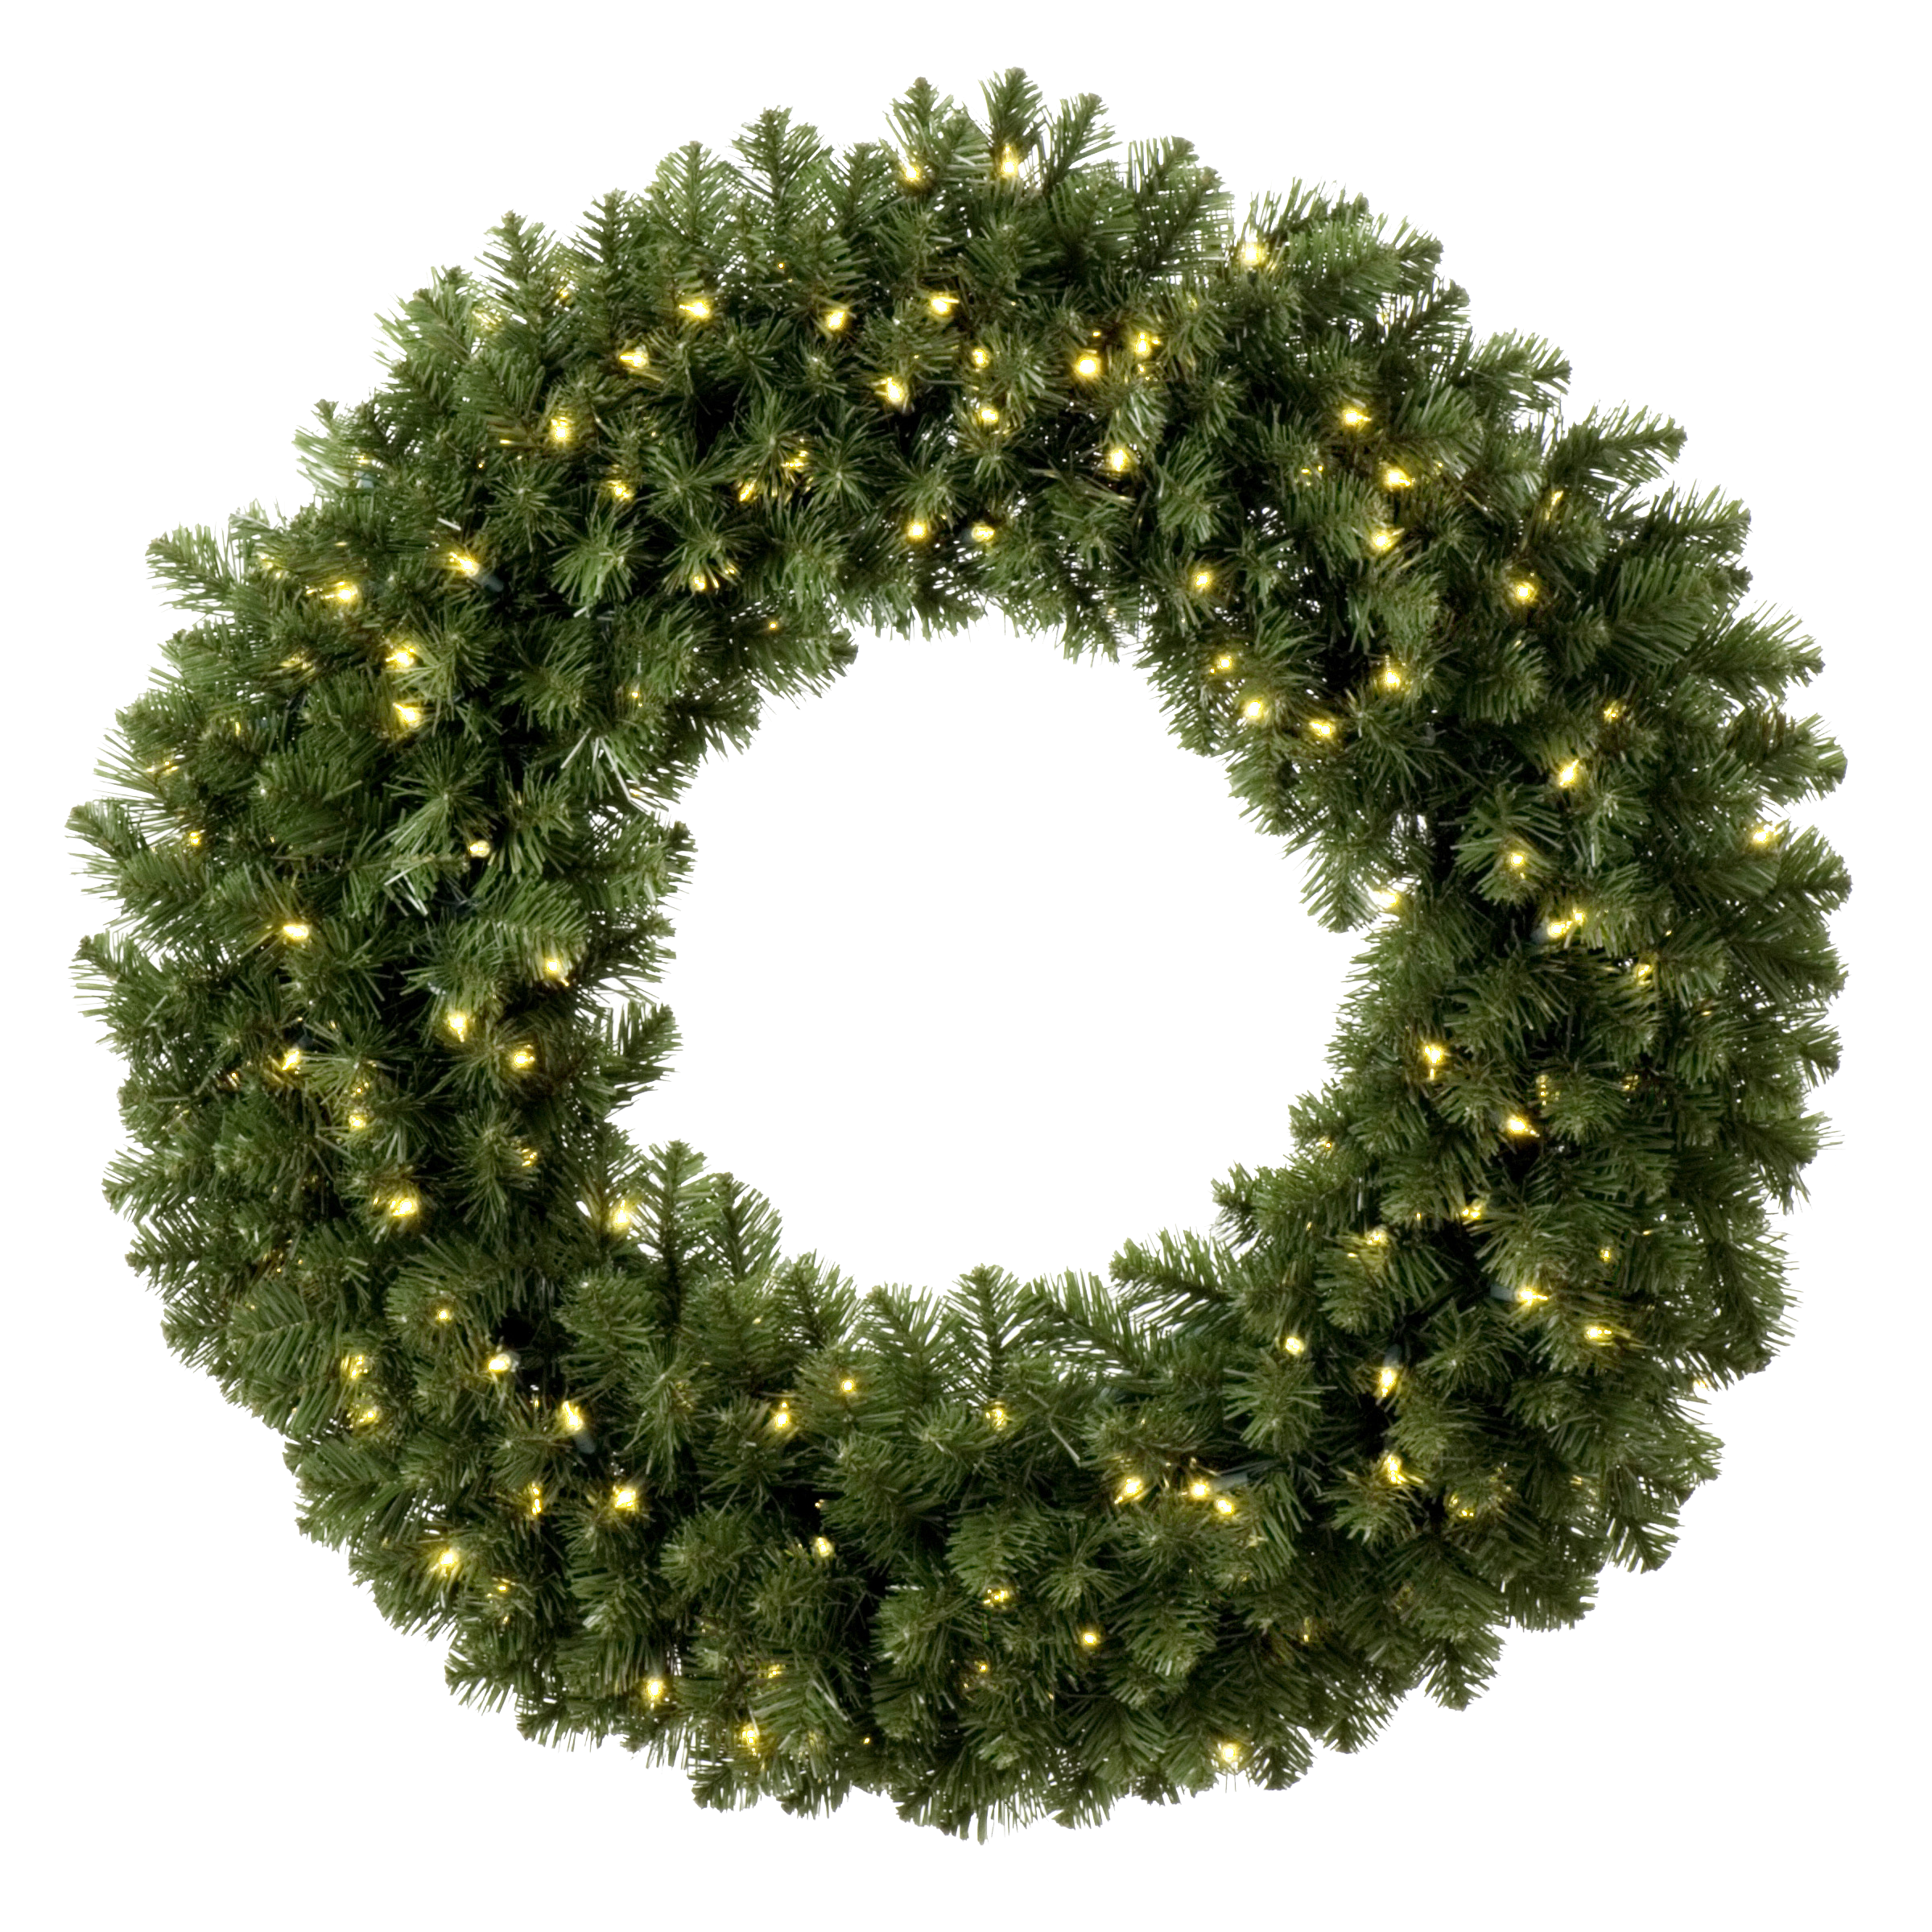 Christmas Wreath Photo PNG Image